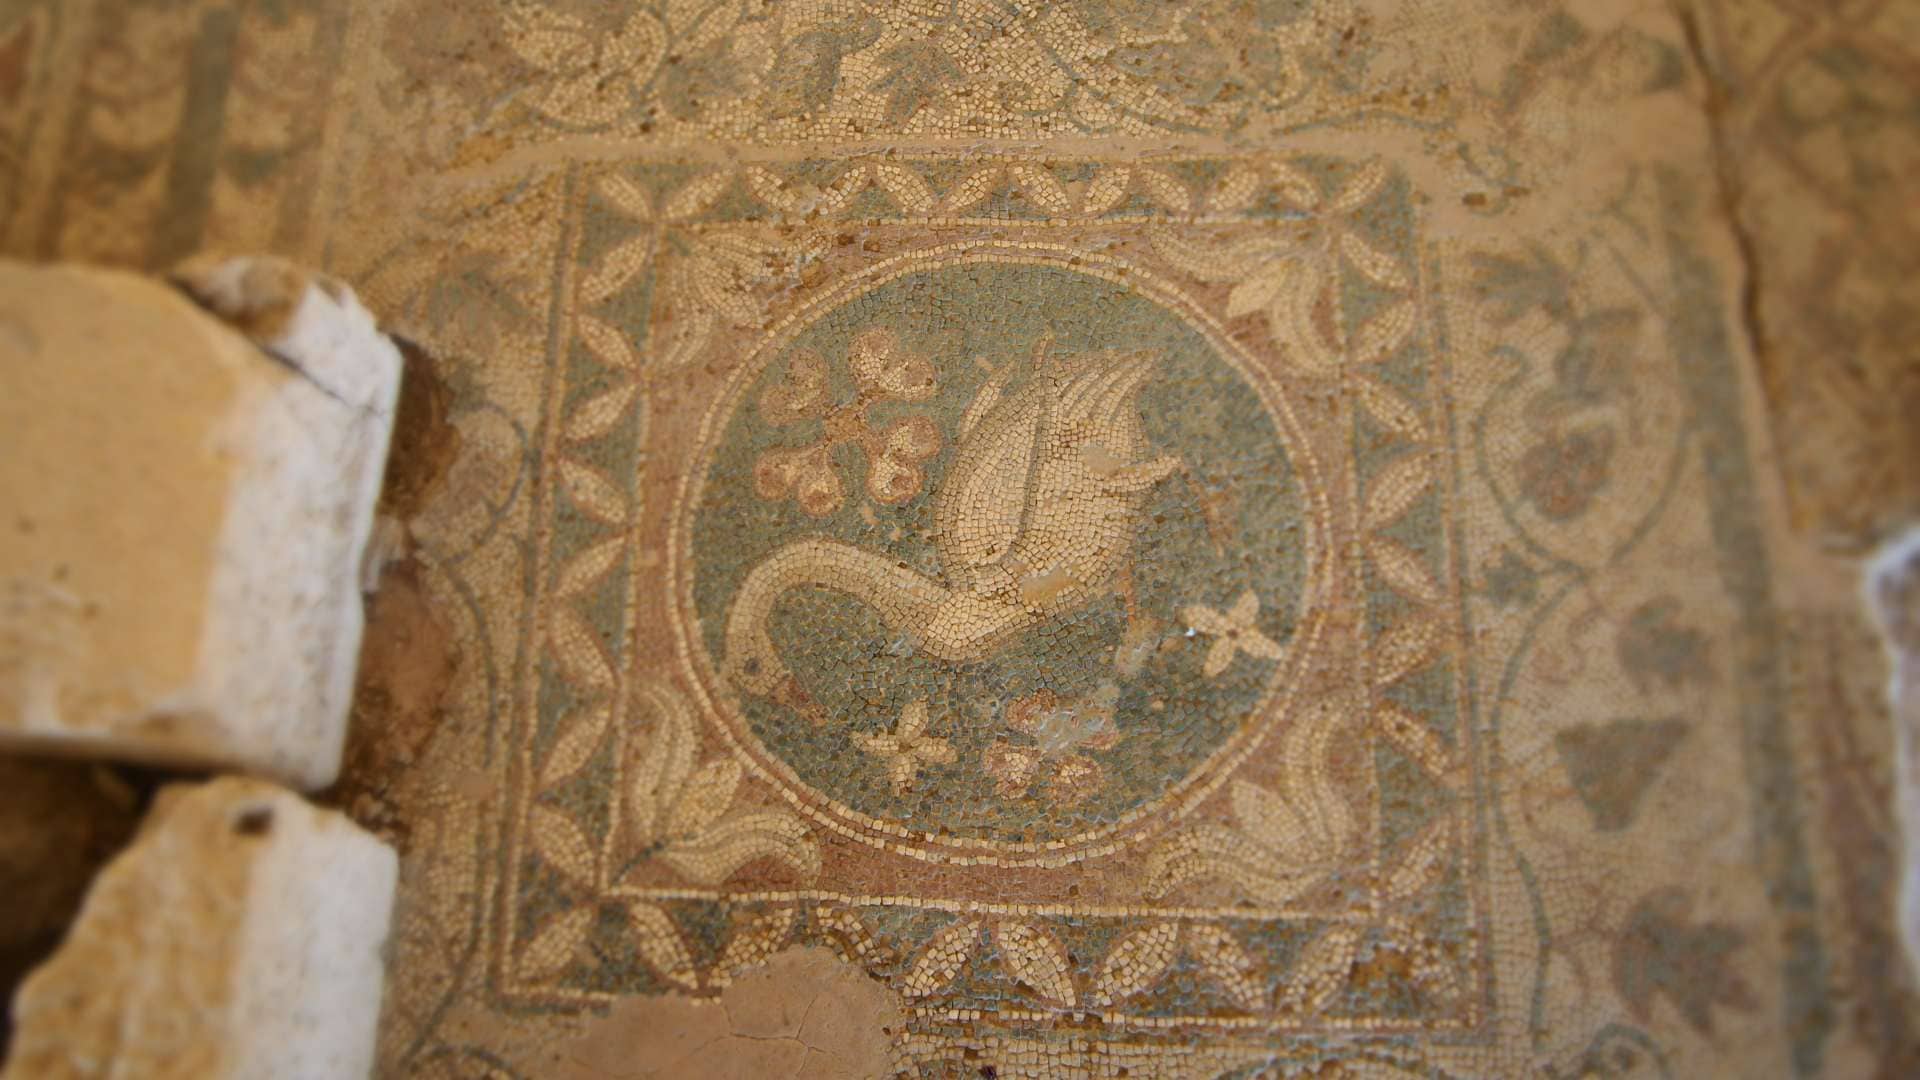 Мозаика "Лебедь", археопарк Соли (Кипр)